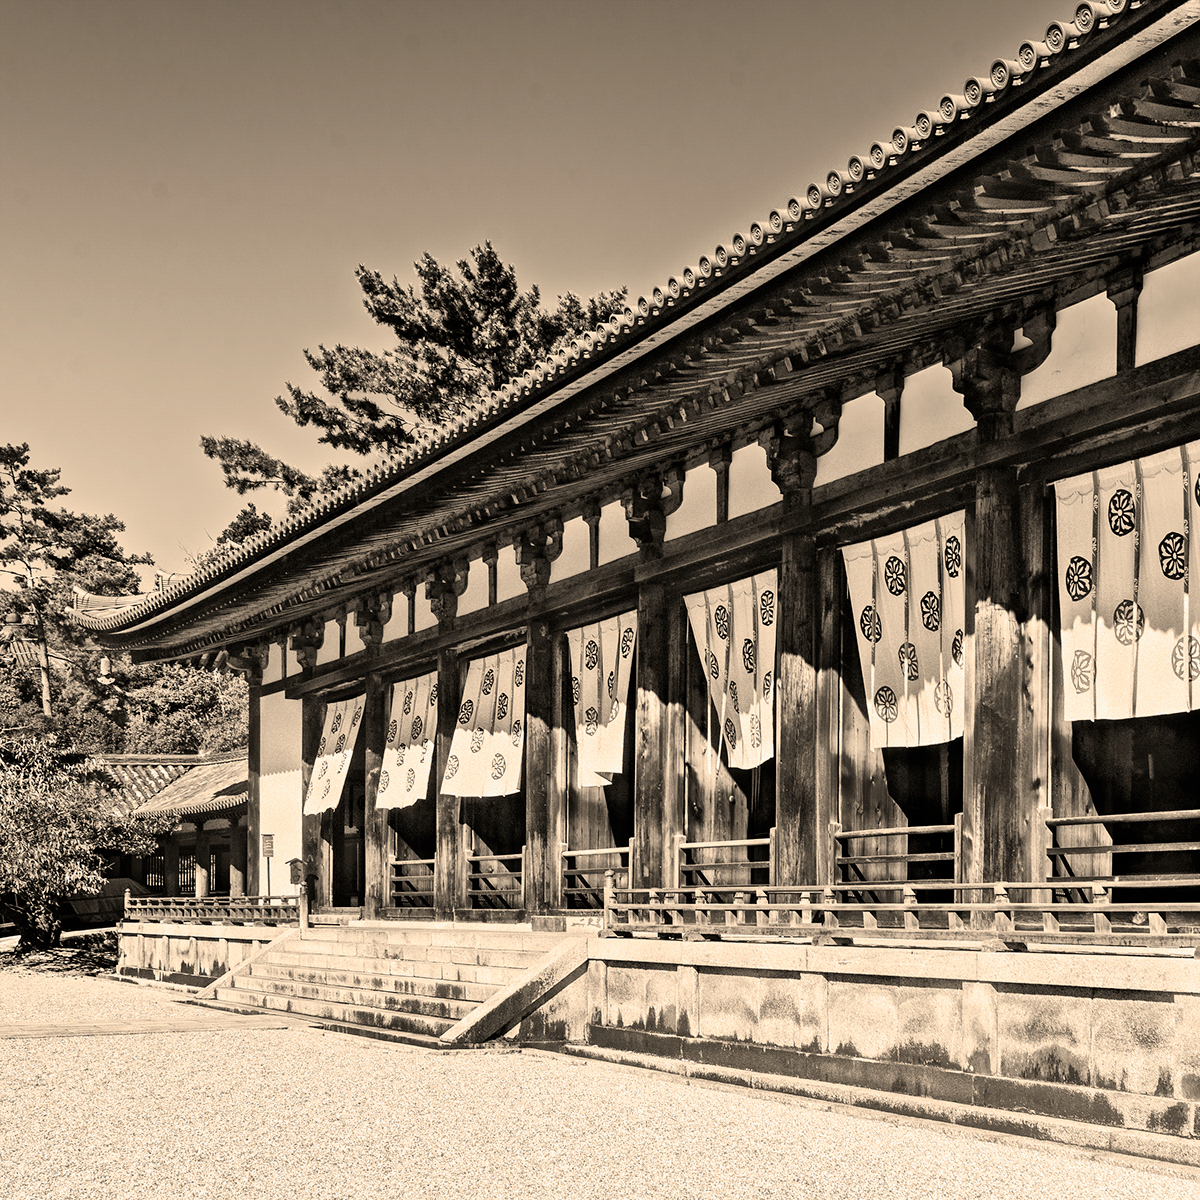 Entranc of the Daikodo, Horyuji (法隆寺), JAPAN
